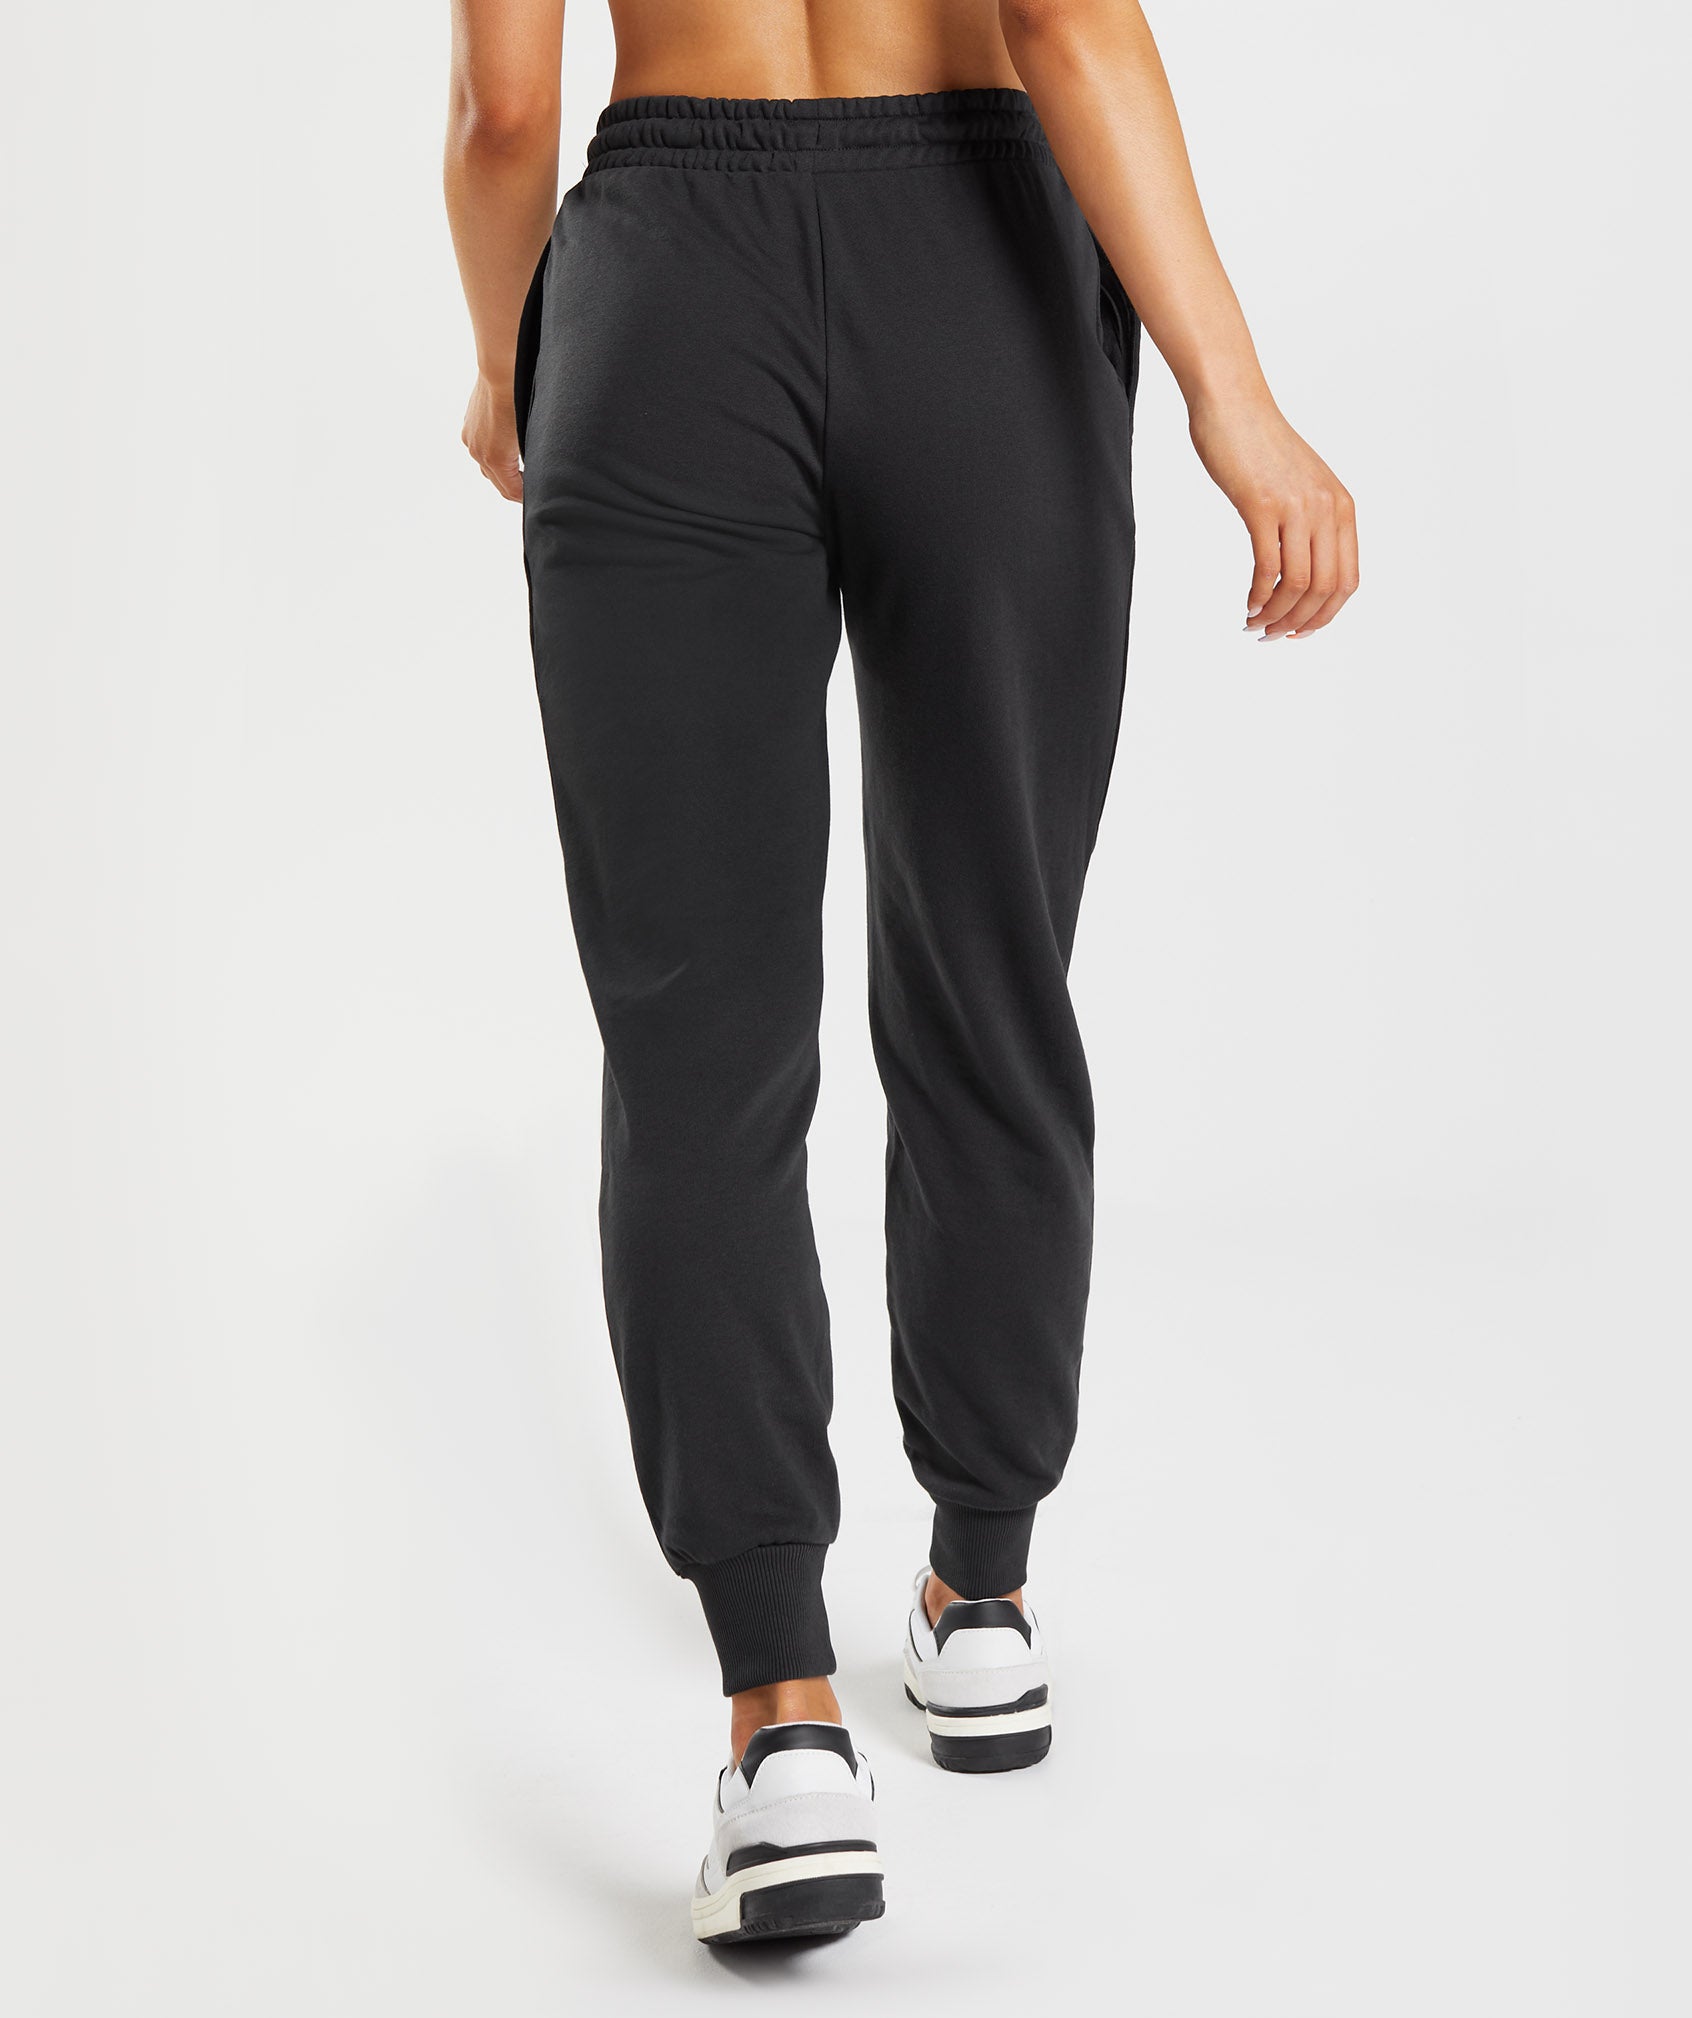 Gymshark Black Sweatpants Joggers Zip pockets Zip ankles Size Small